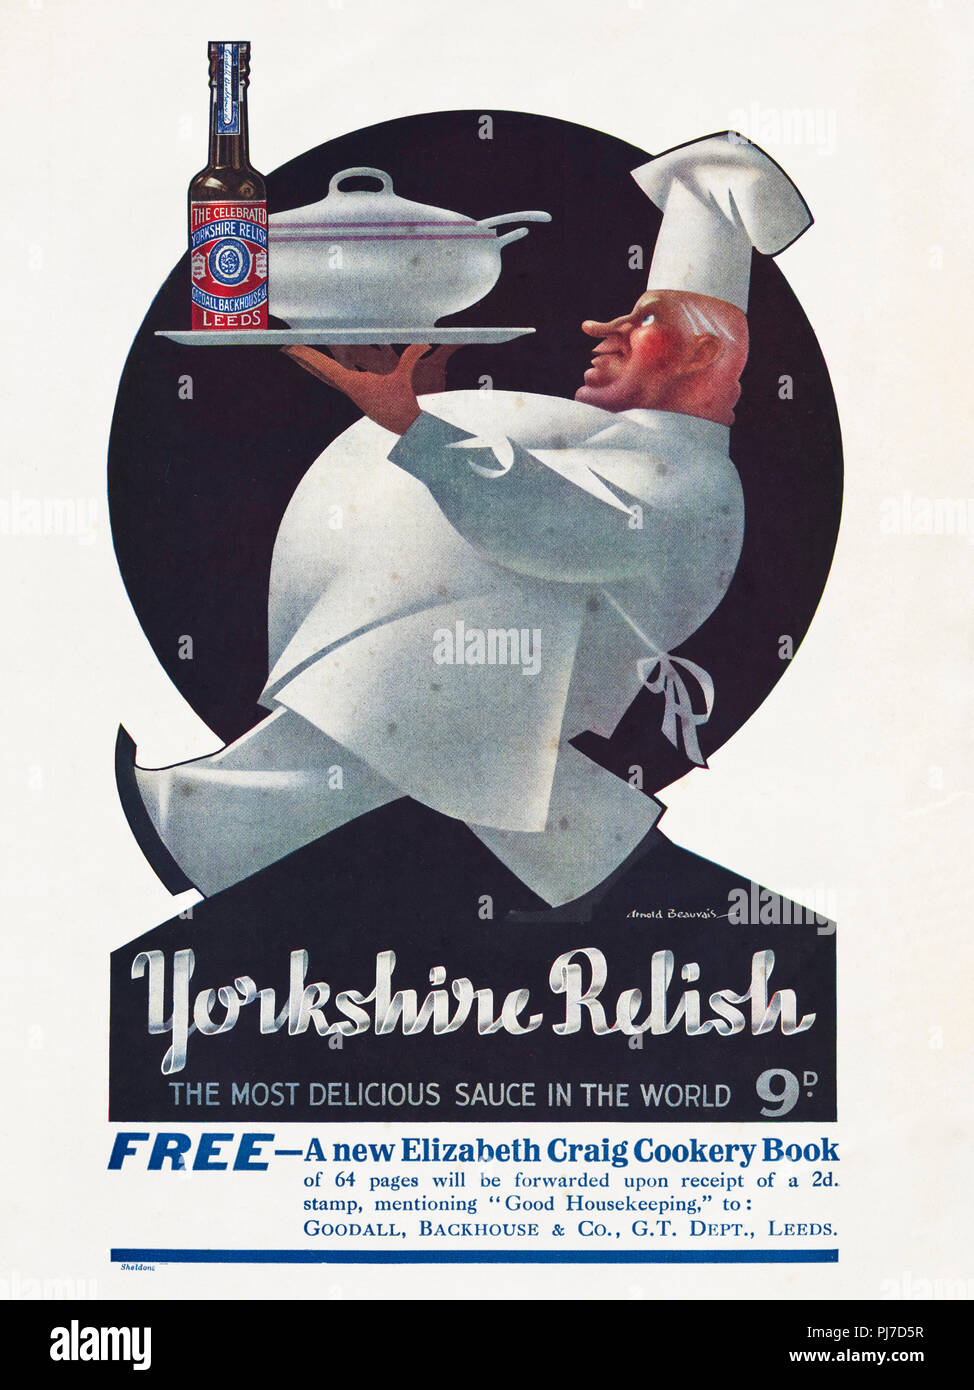 1930s old vintage original advert advertising Yorkshire Relish sauce in English magazine circa 1932 Stock Photo